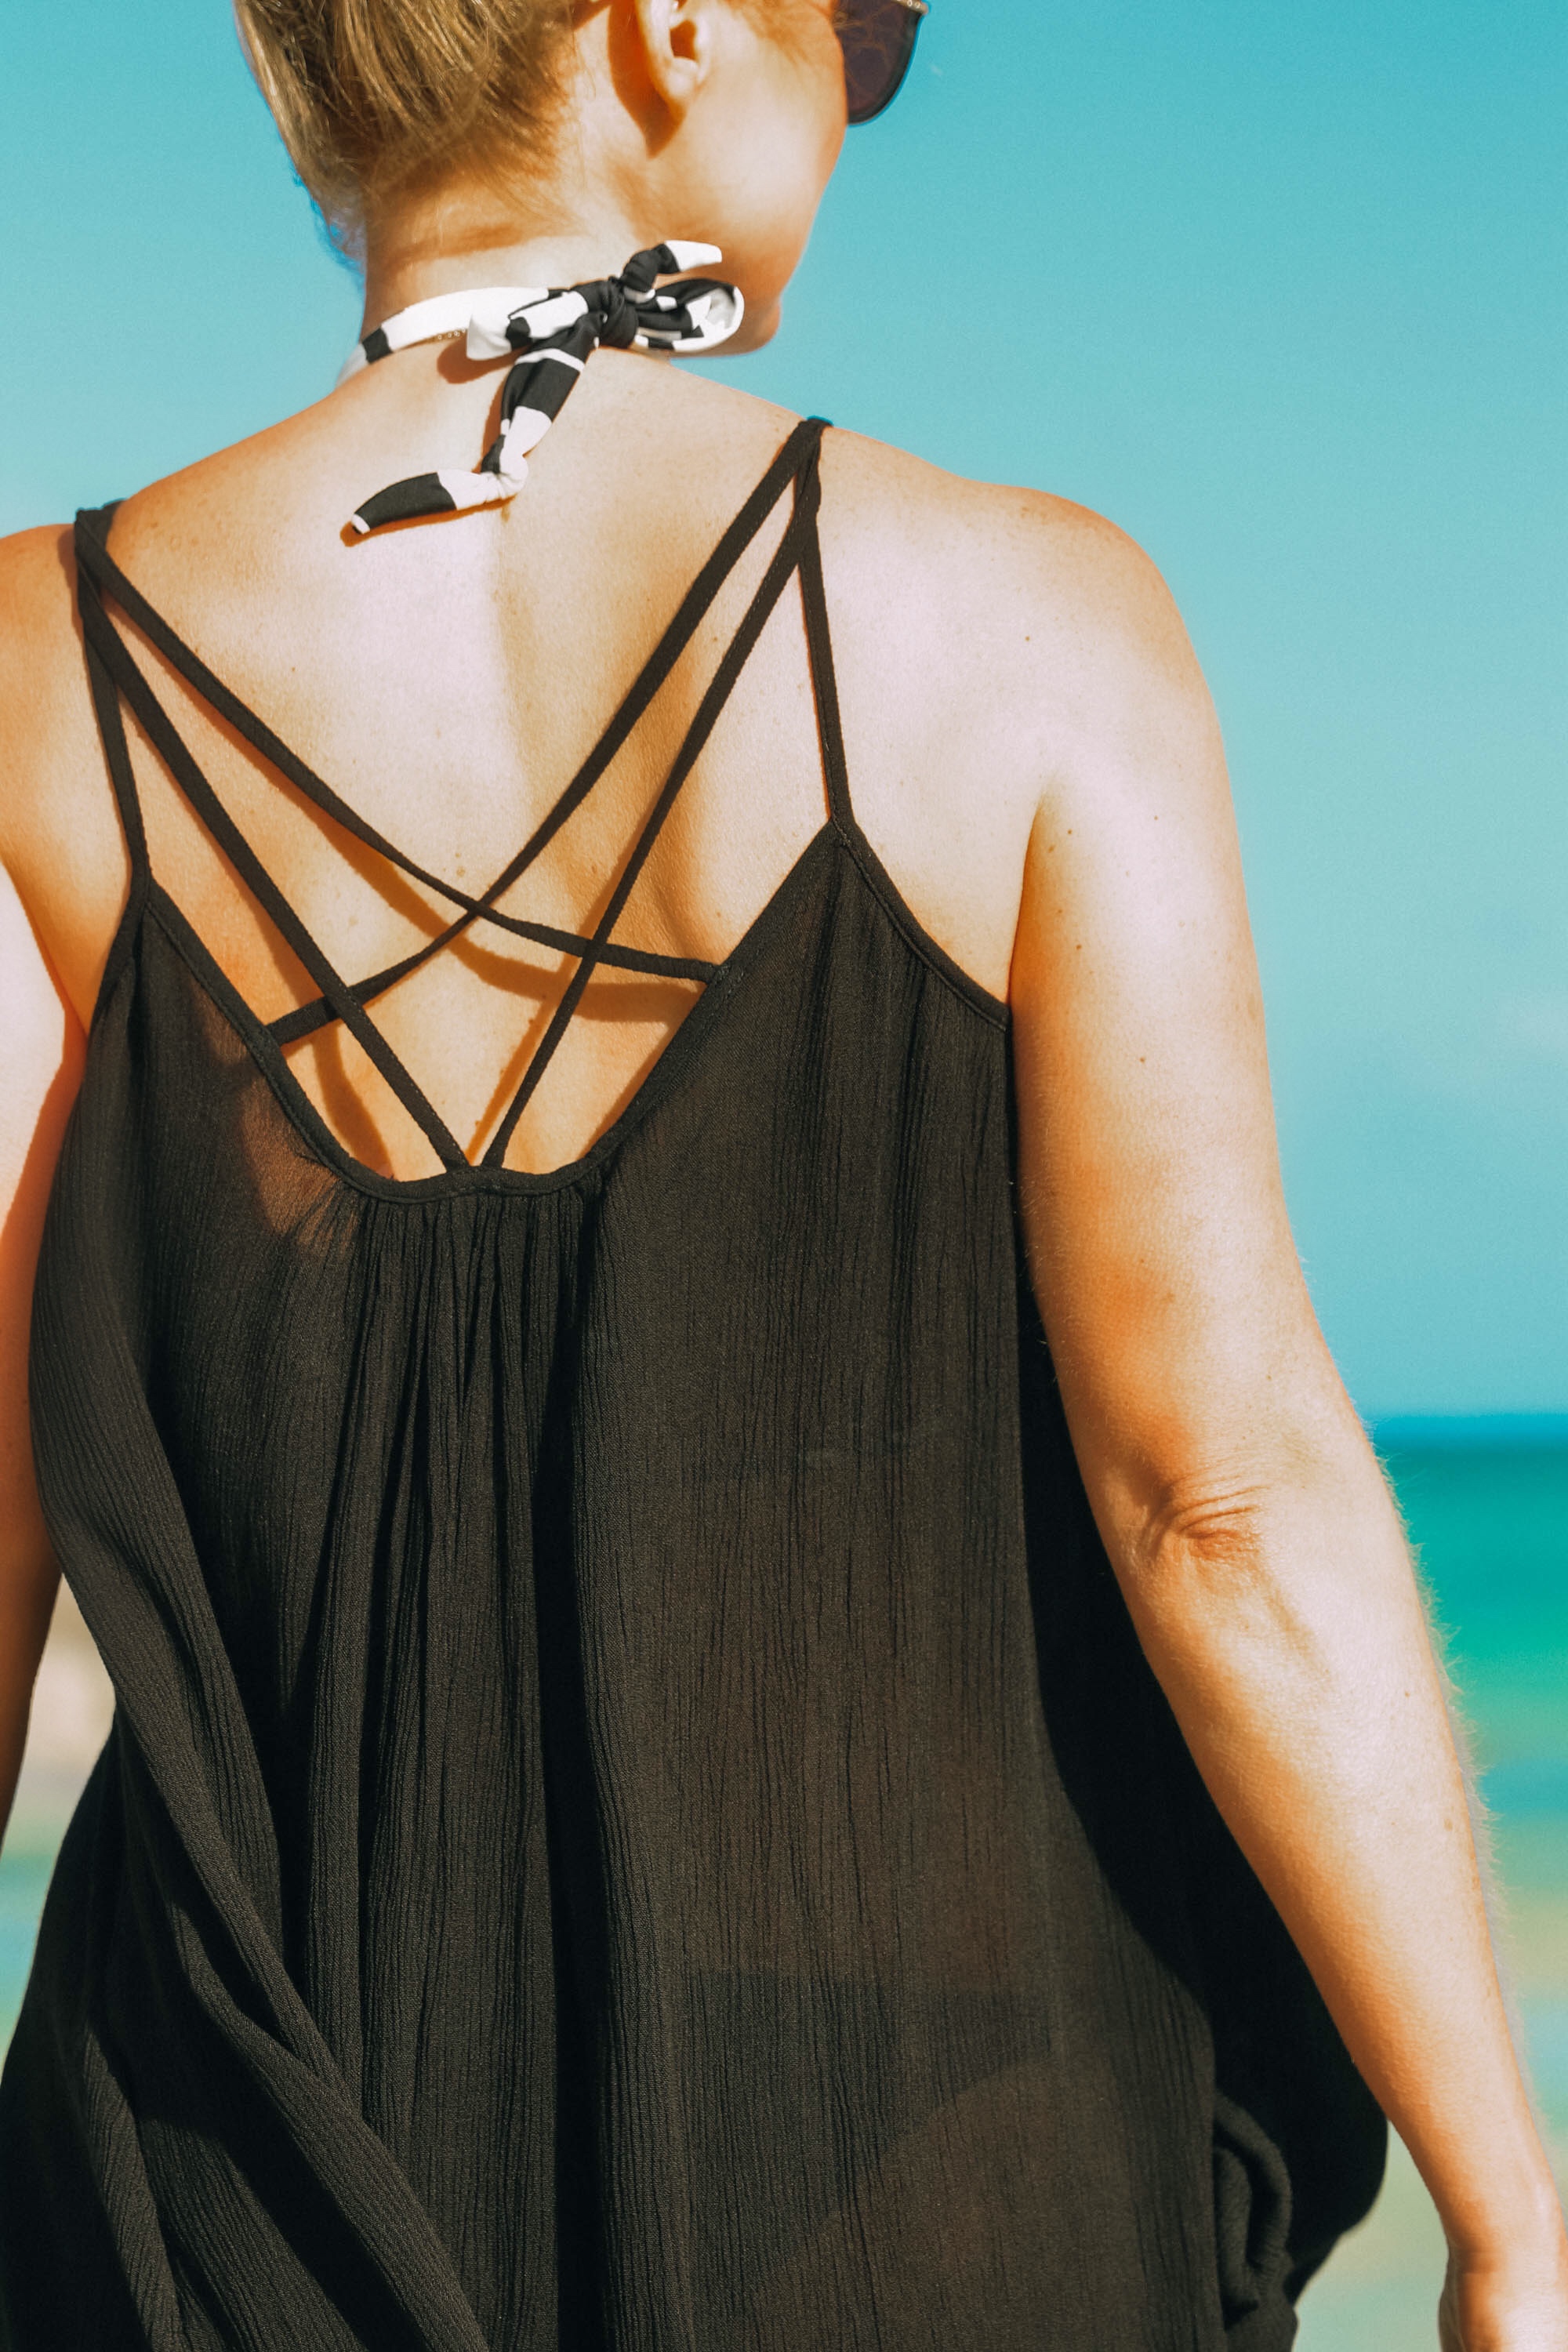 Schwarzes Elan-Slipdress-Badeanzug-Vertuschung, getragen über dem Badeanzug am Strand, beste Vertuschung, Badeanzug-Vertuschung, Vertuschungskleider